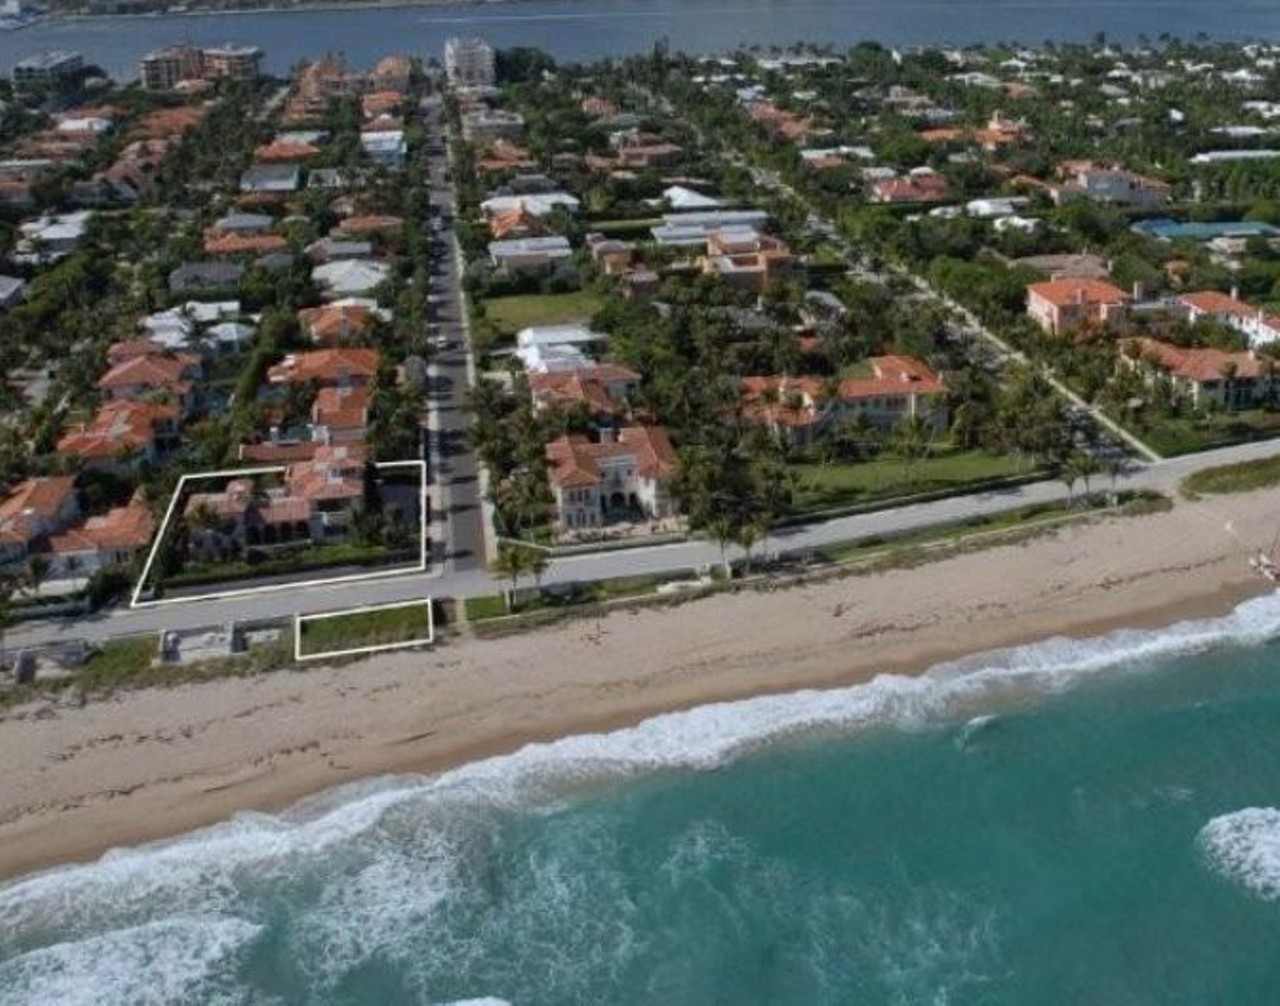 Rock legend Jon Bon Jovi just bought this Florida mansion for $10 million